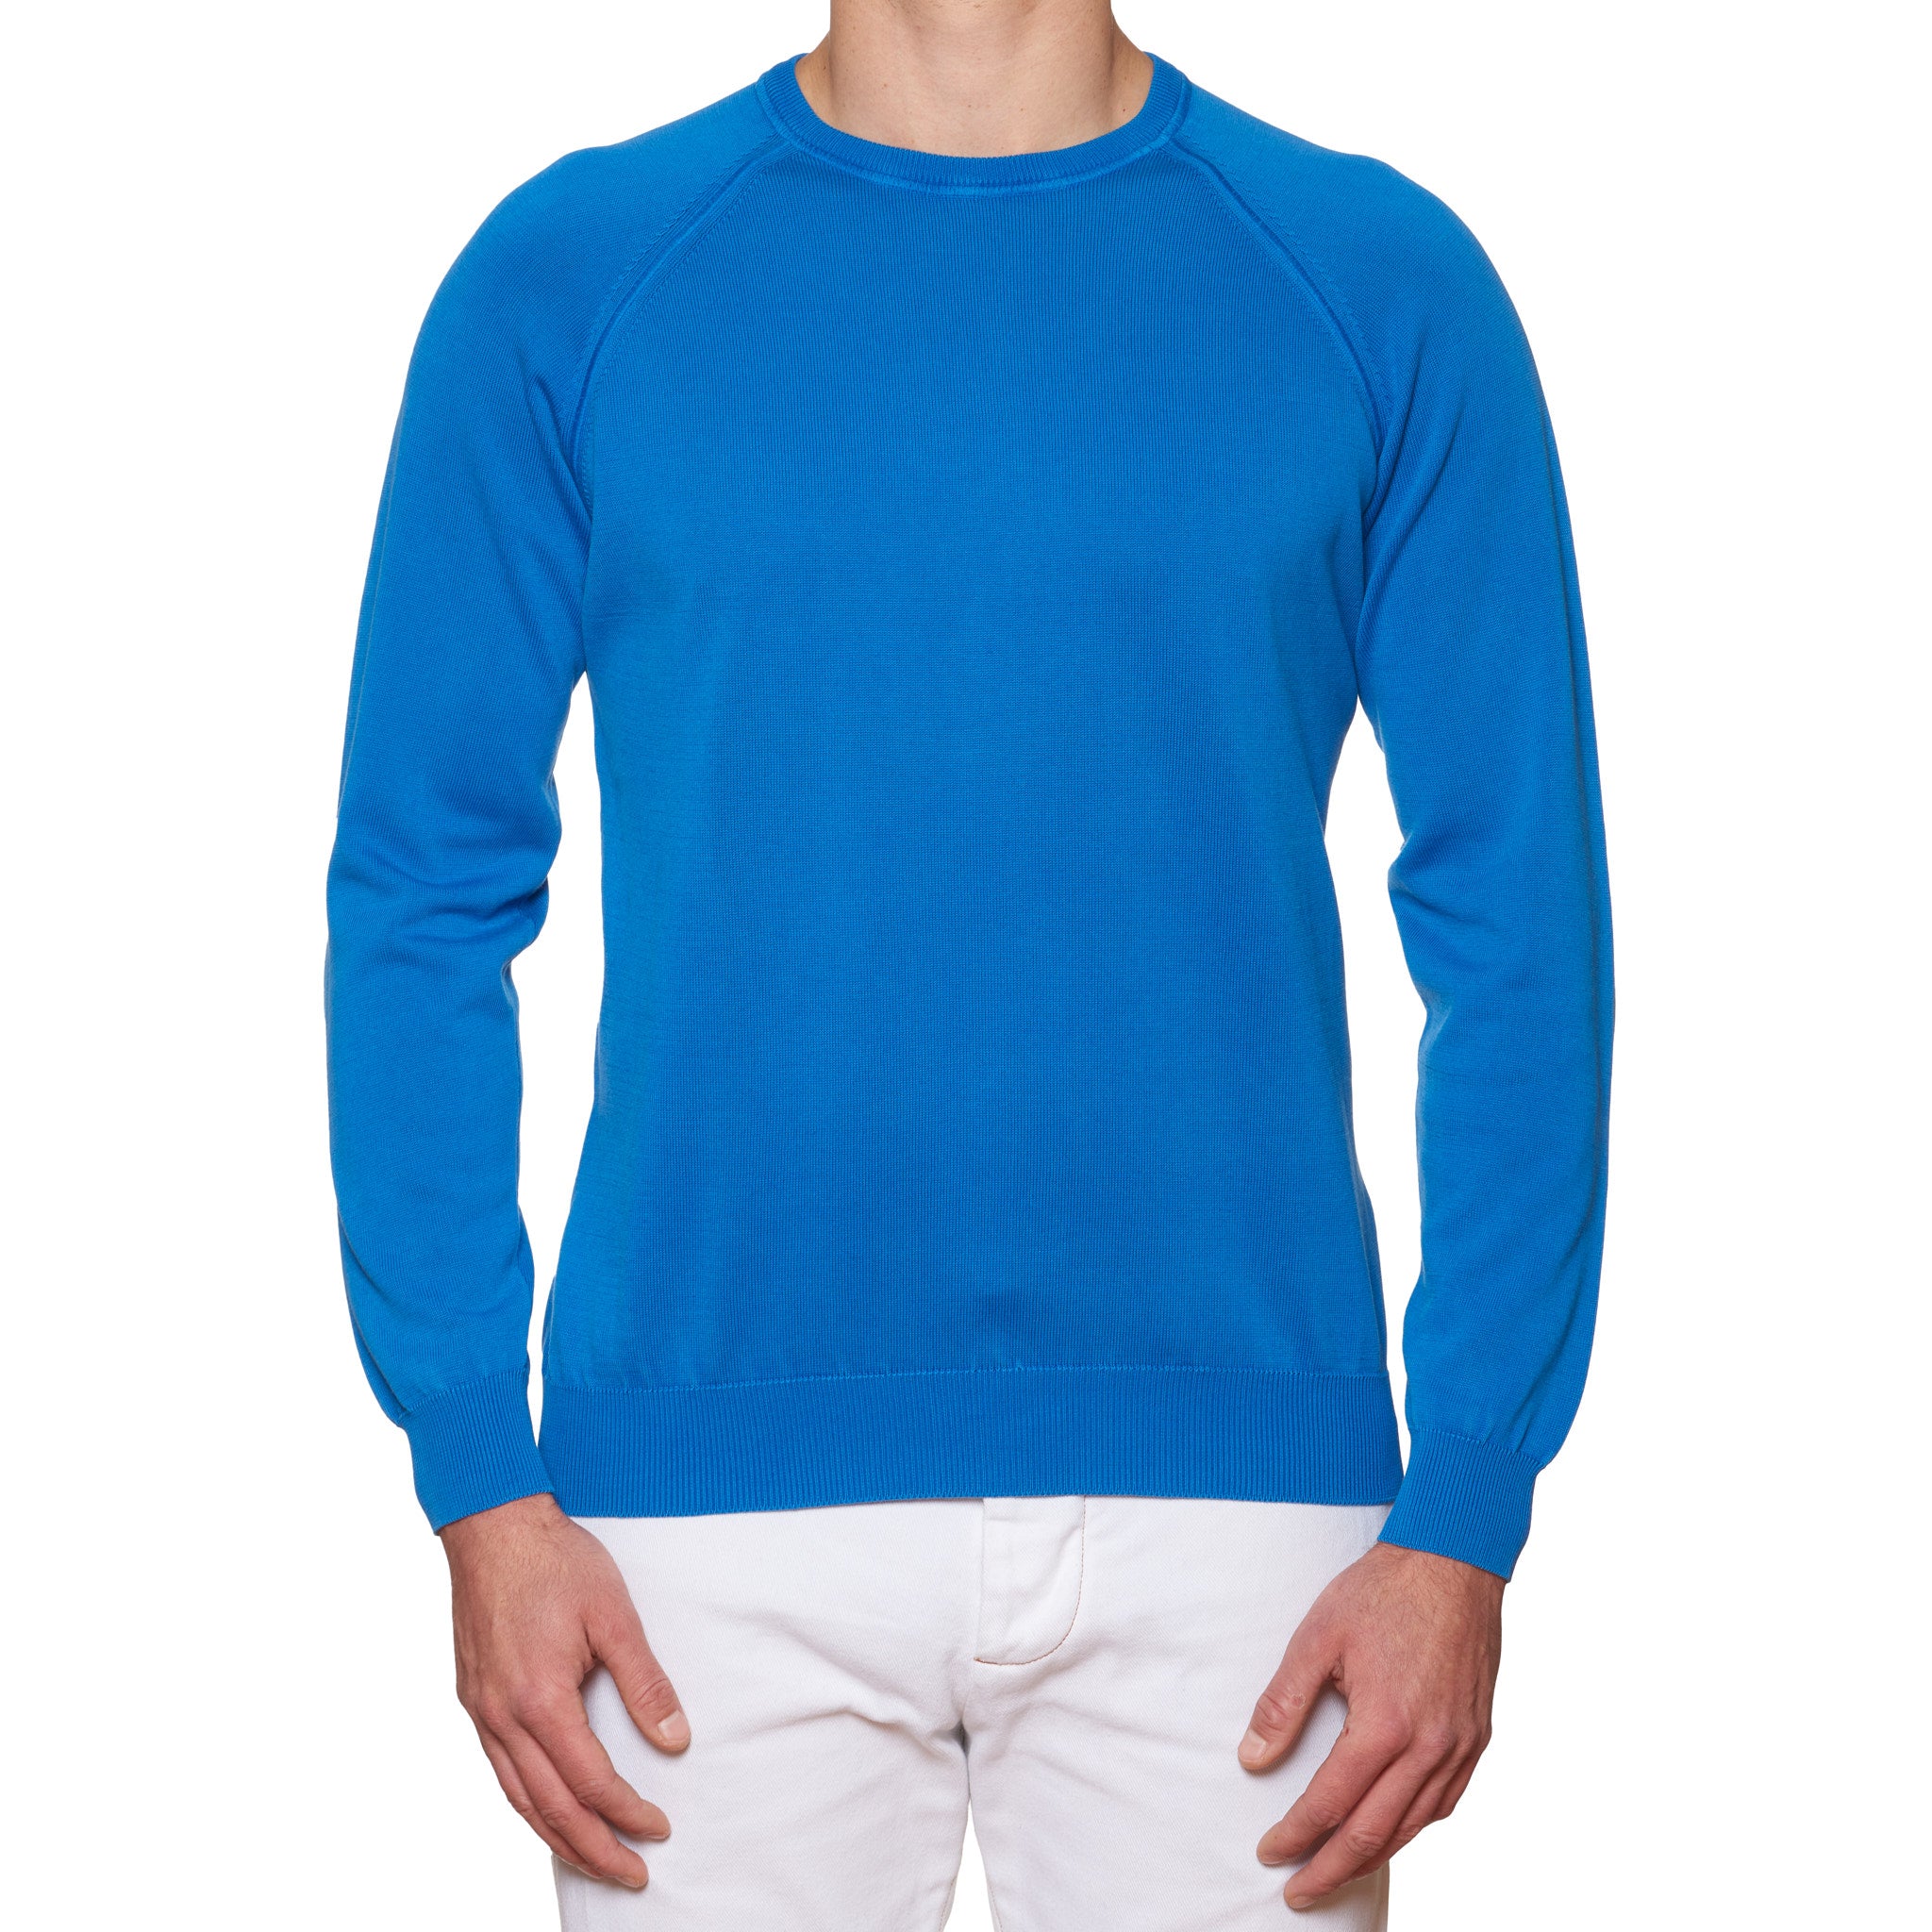 FEDELI Blue Cotton Raglan Sleeve Crewneck Sweater NEW XL FEDELI